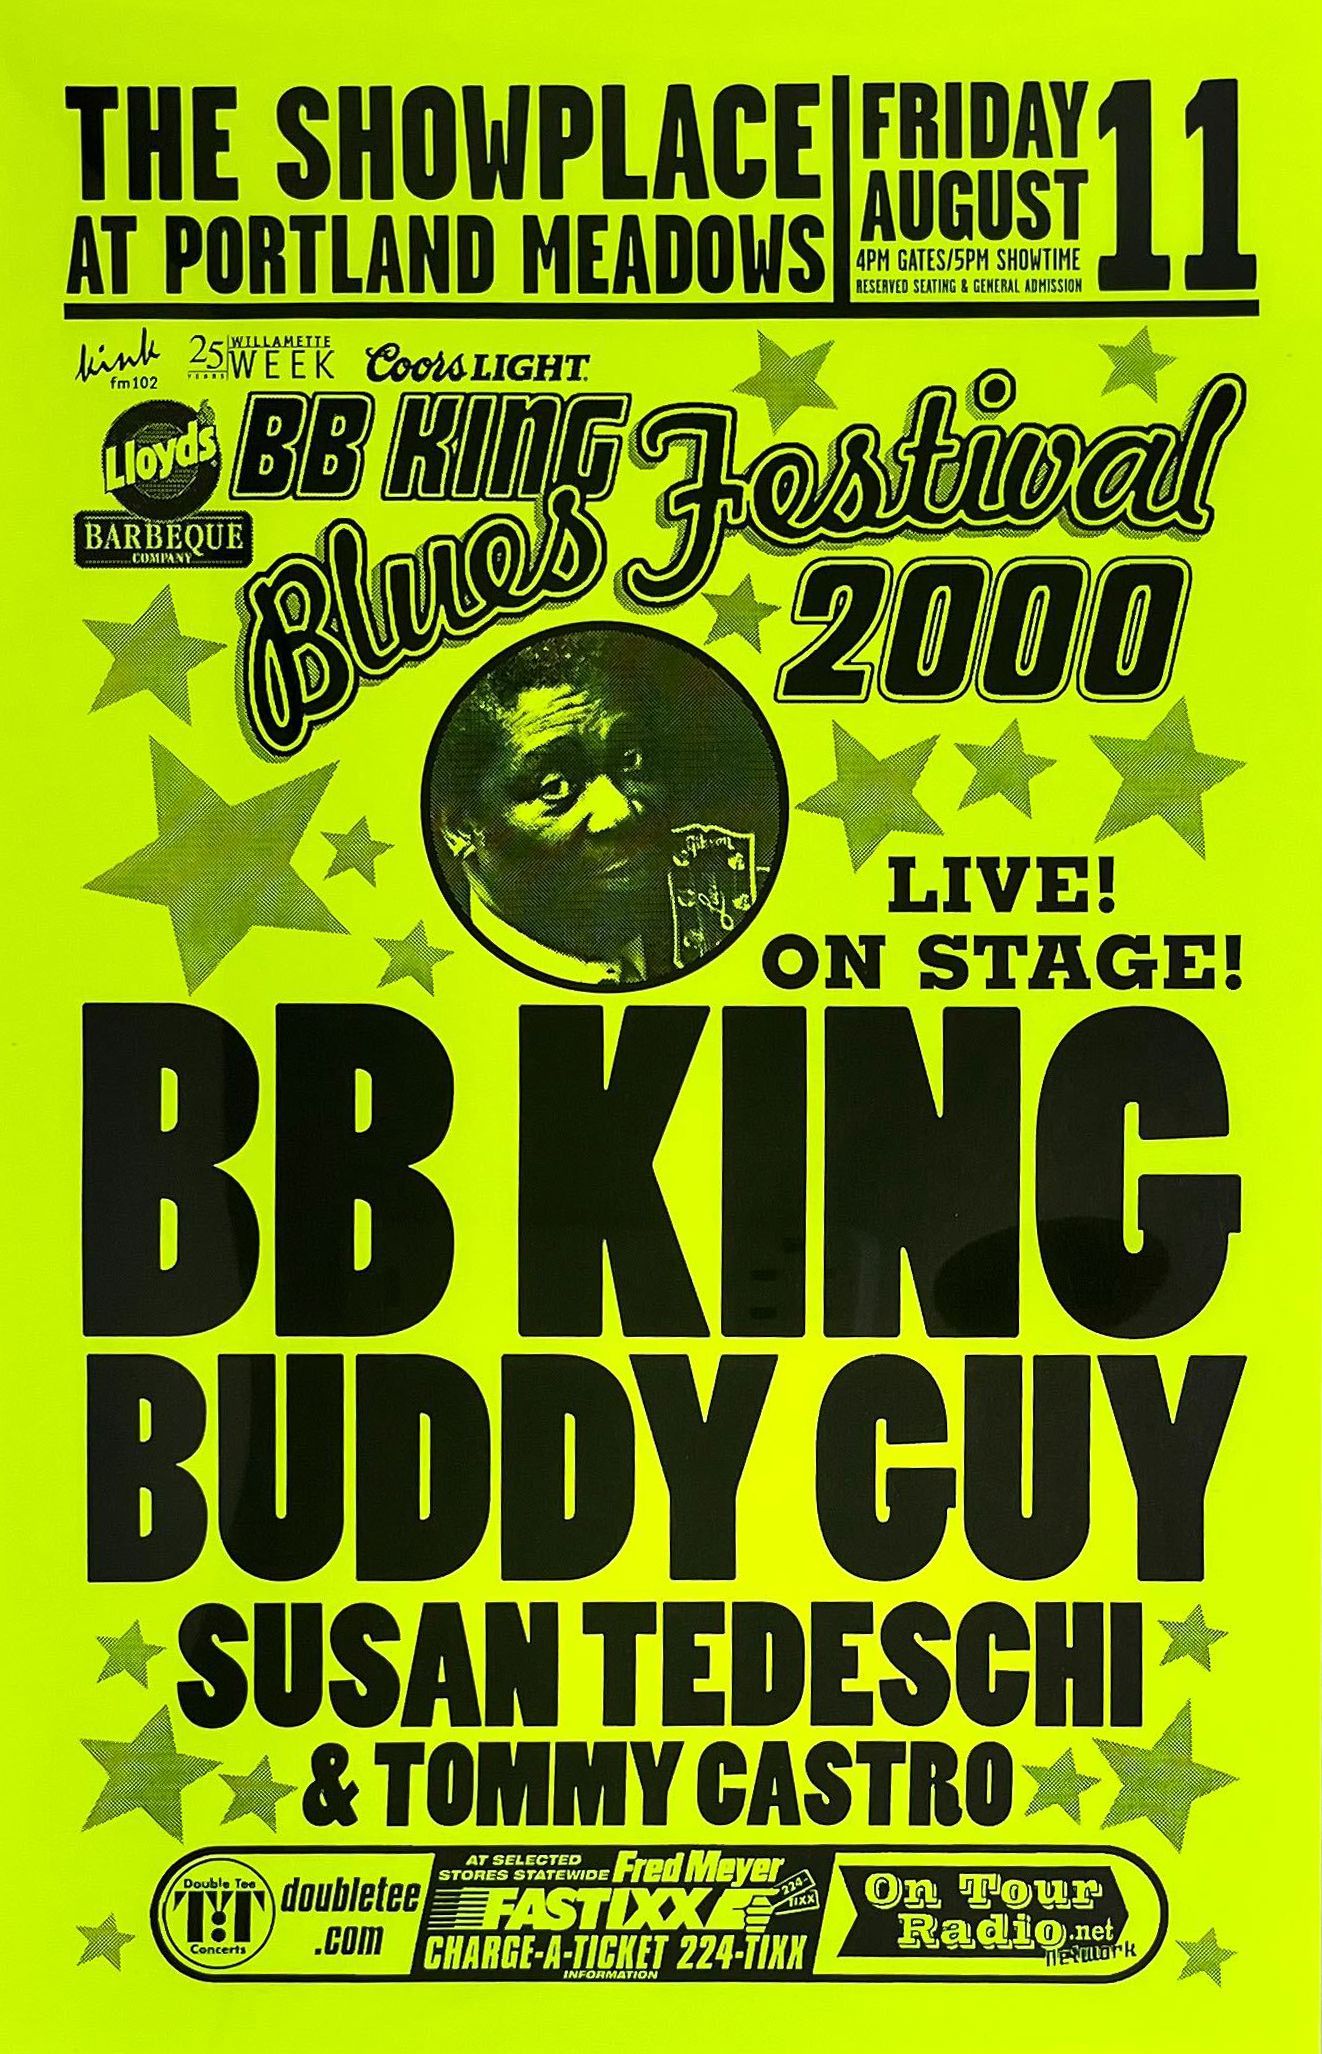 MXP-254.4 BB King Portland Meadows 2000 Concert Poster